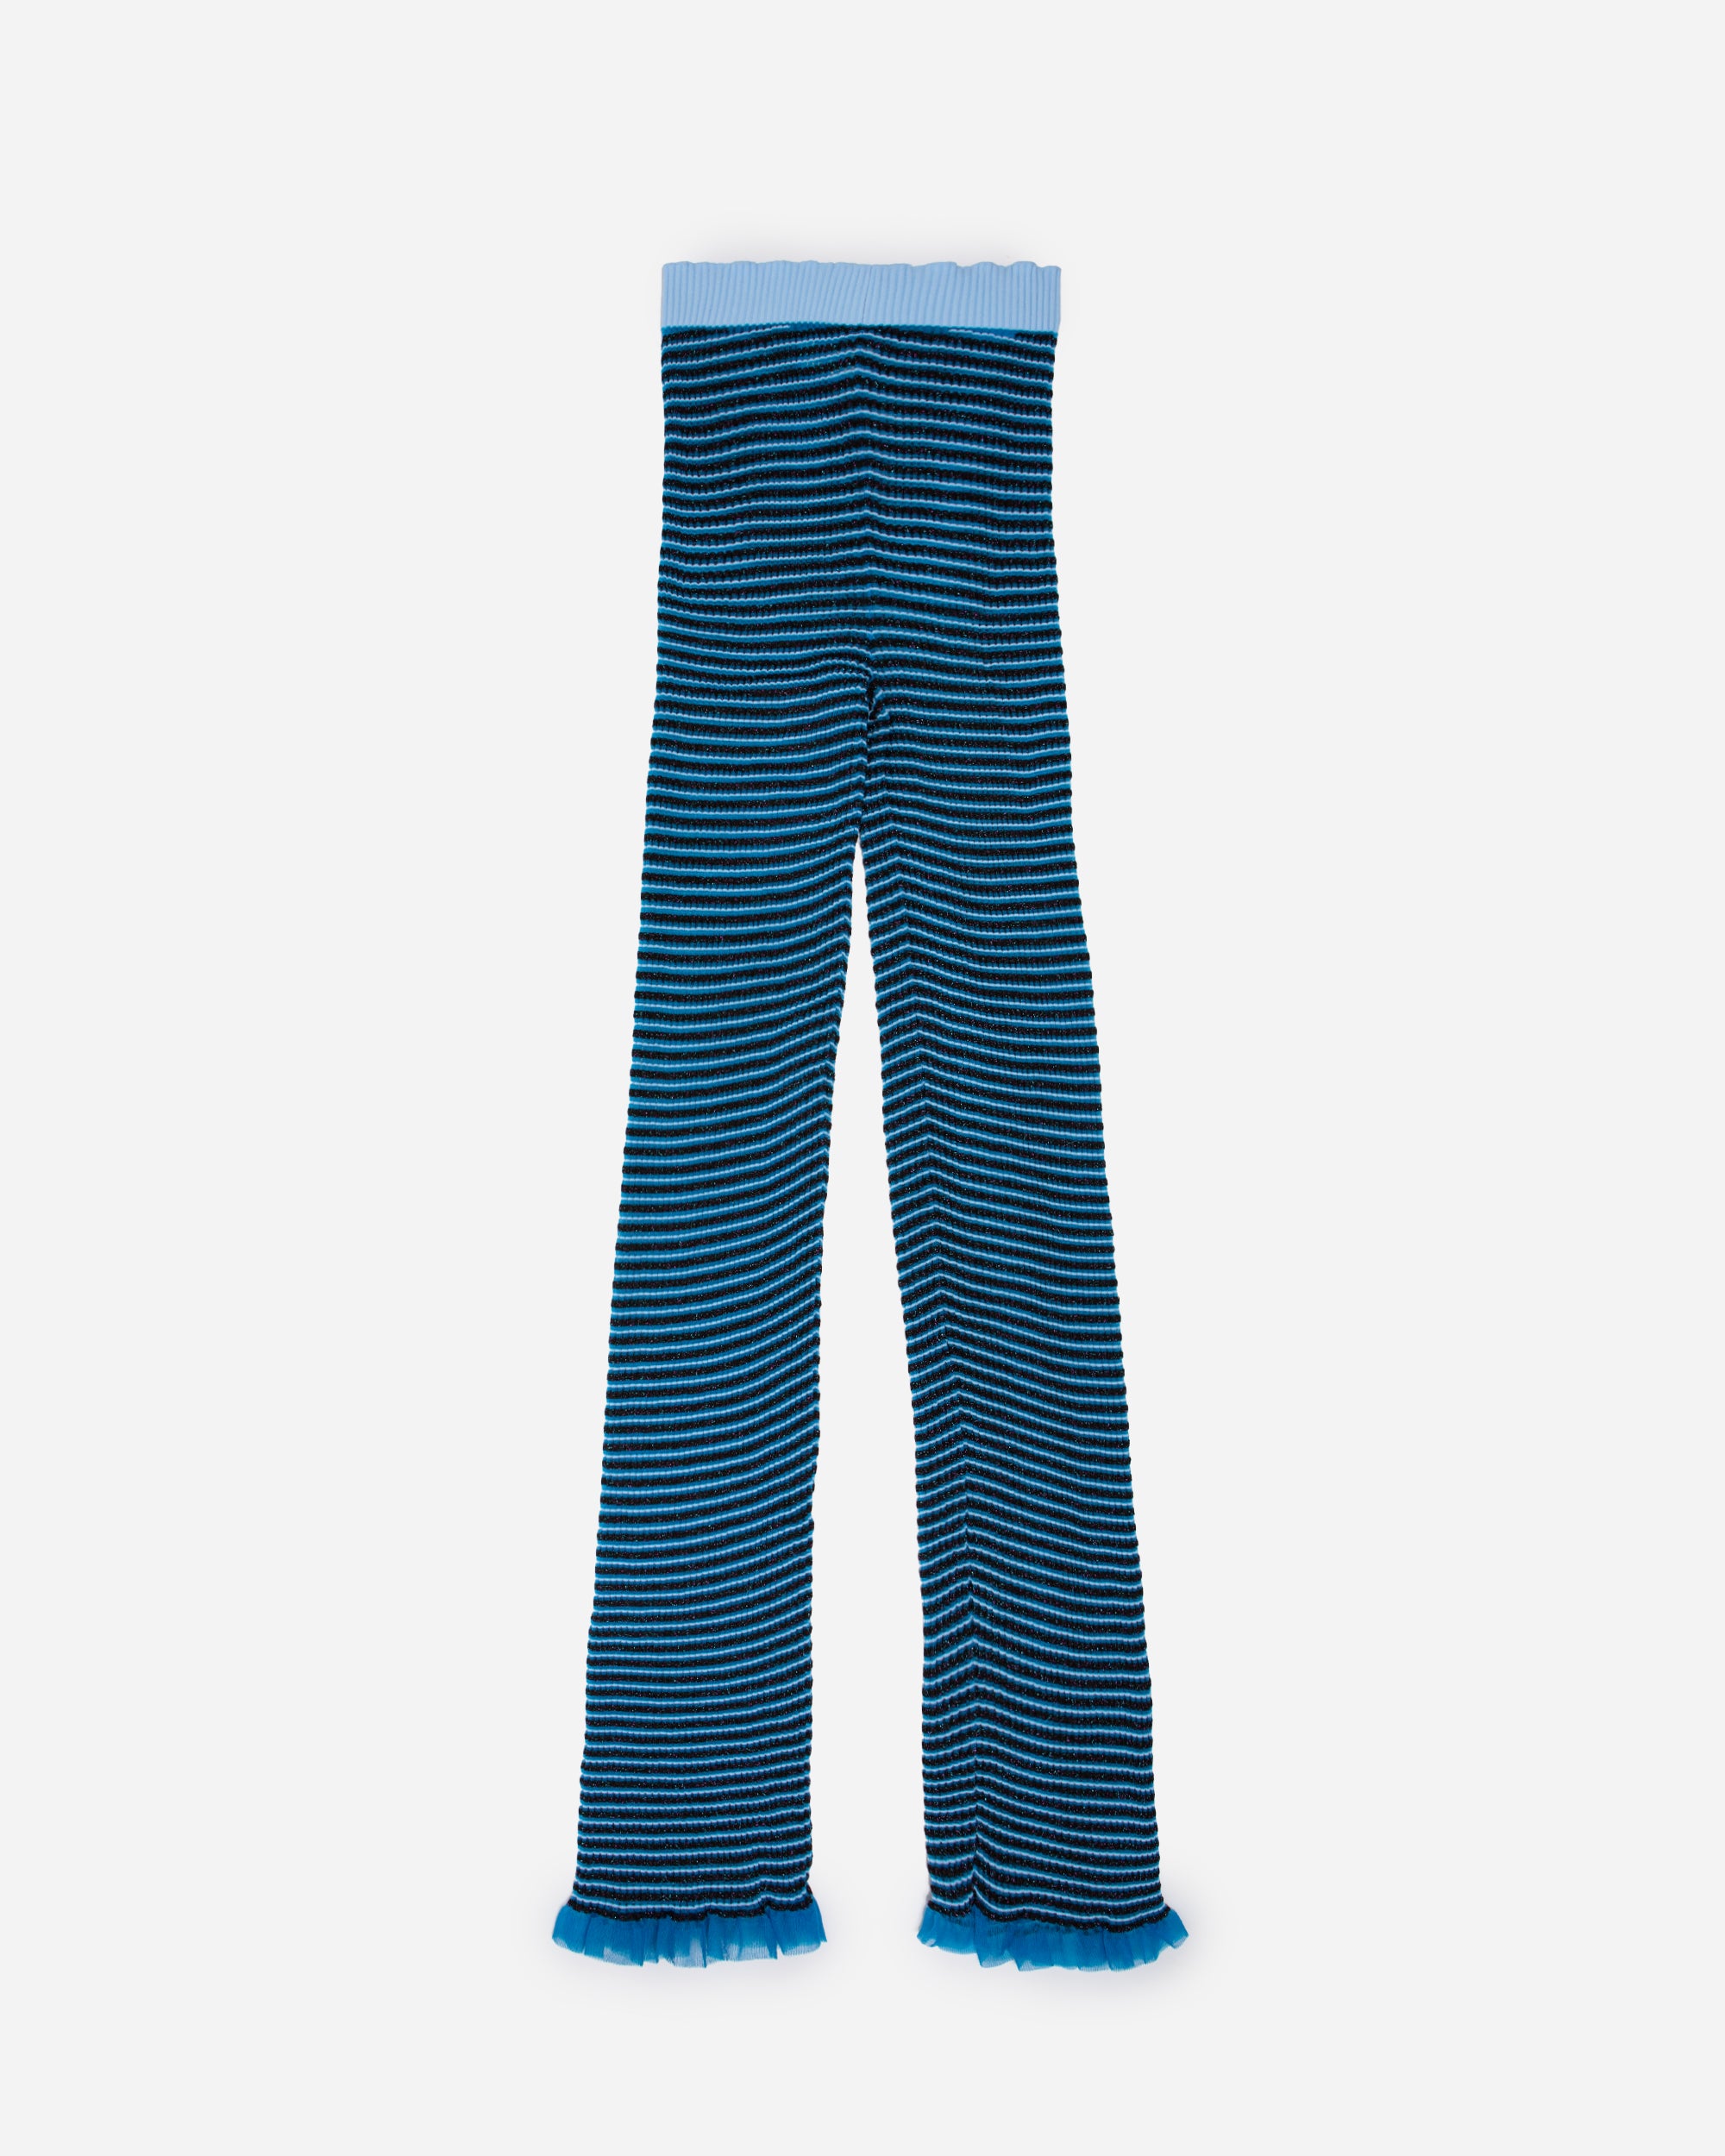 Nadia Wire Secret stripes trouser blue/brown 503-BLU